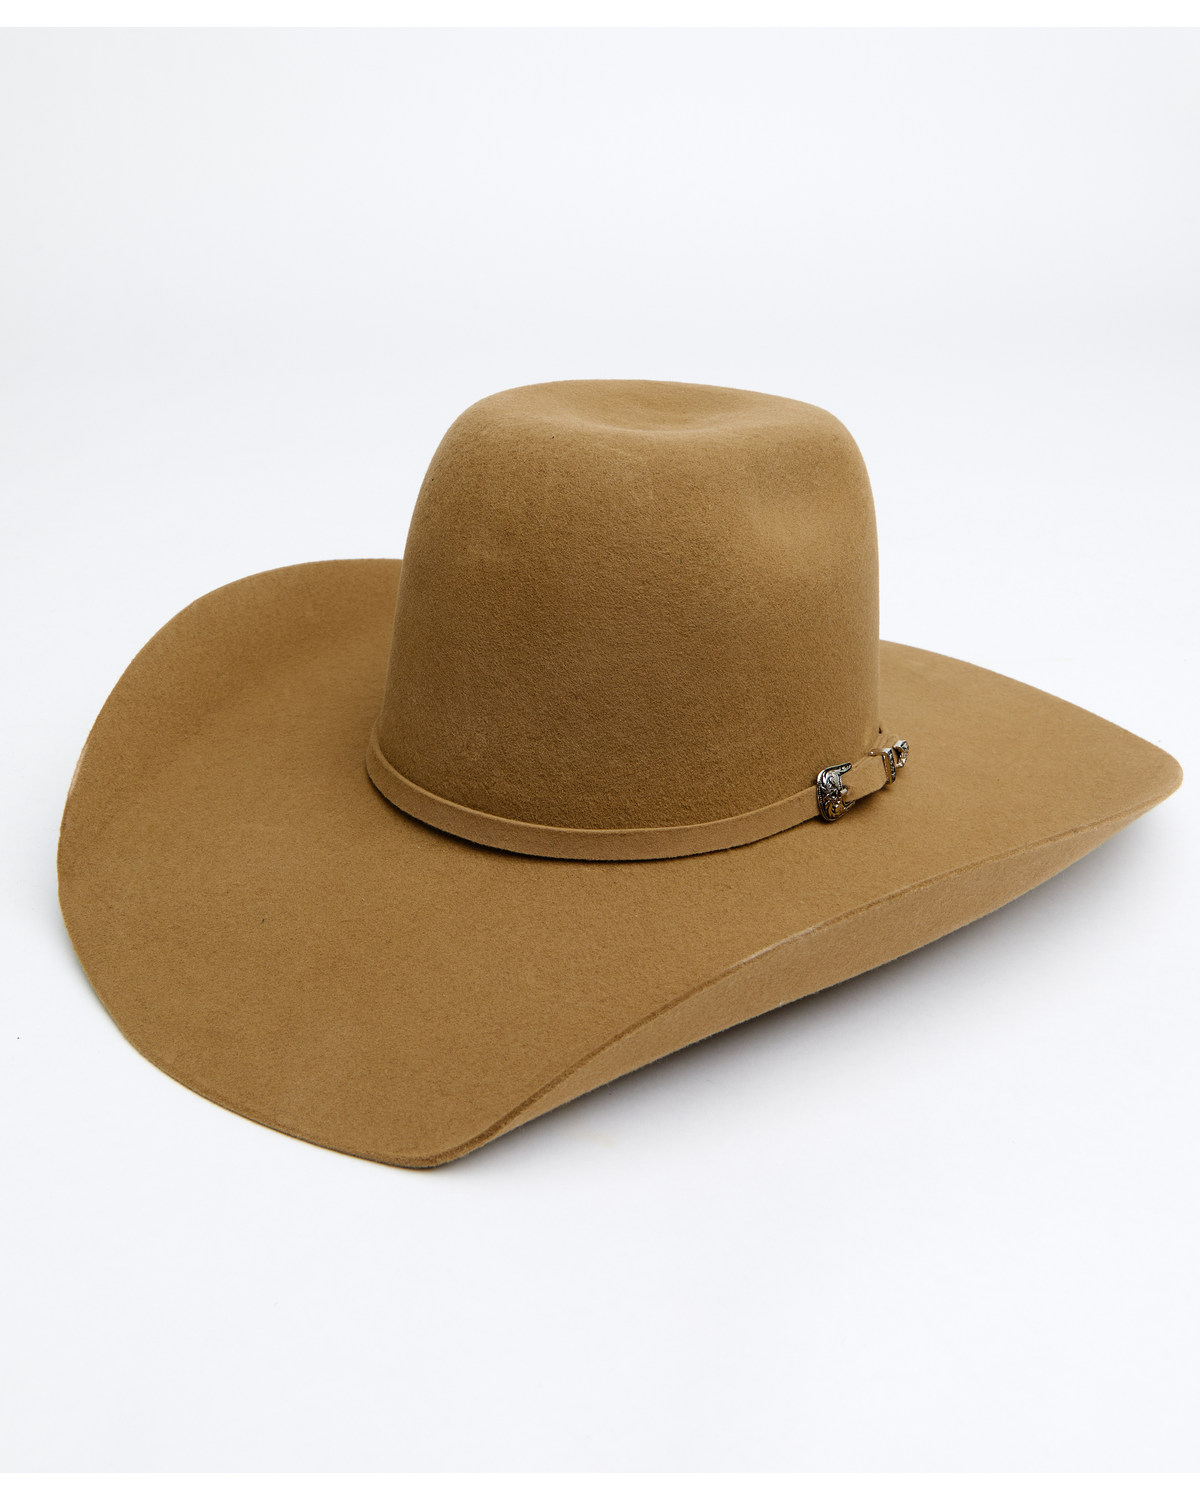 Cody James Bull Rider 3X Felt Cowboy Hat